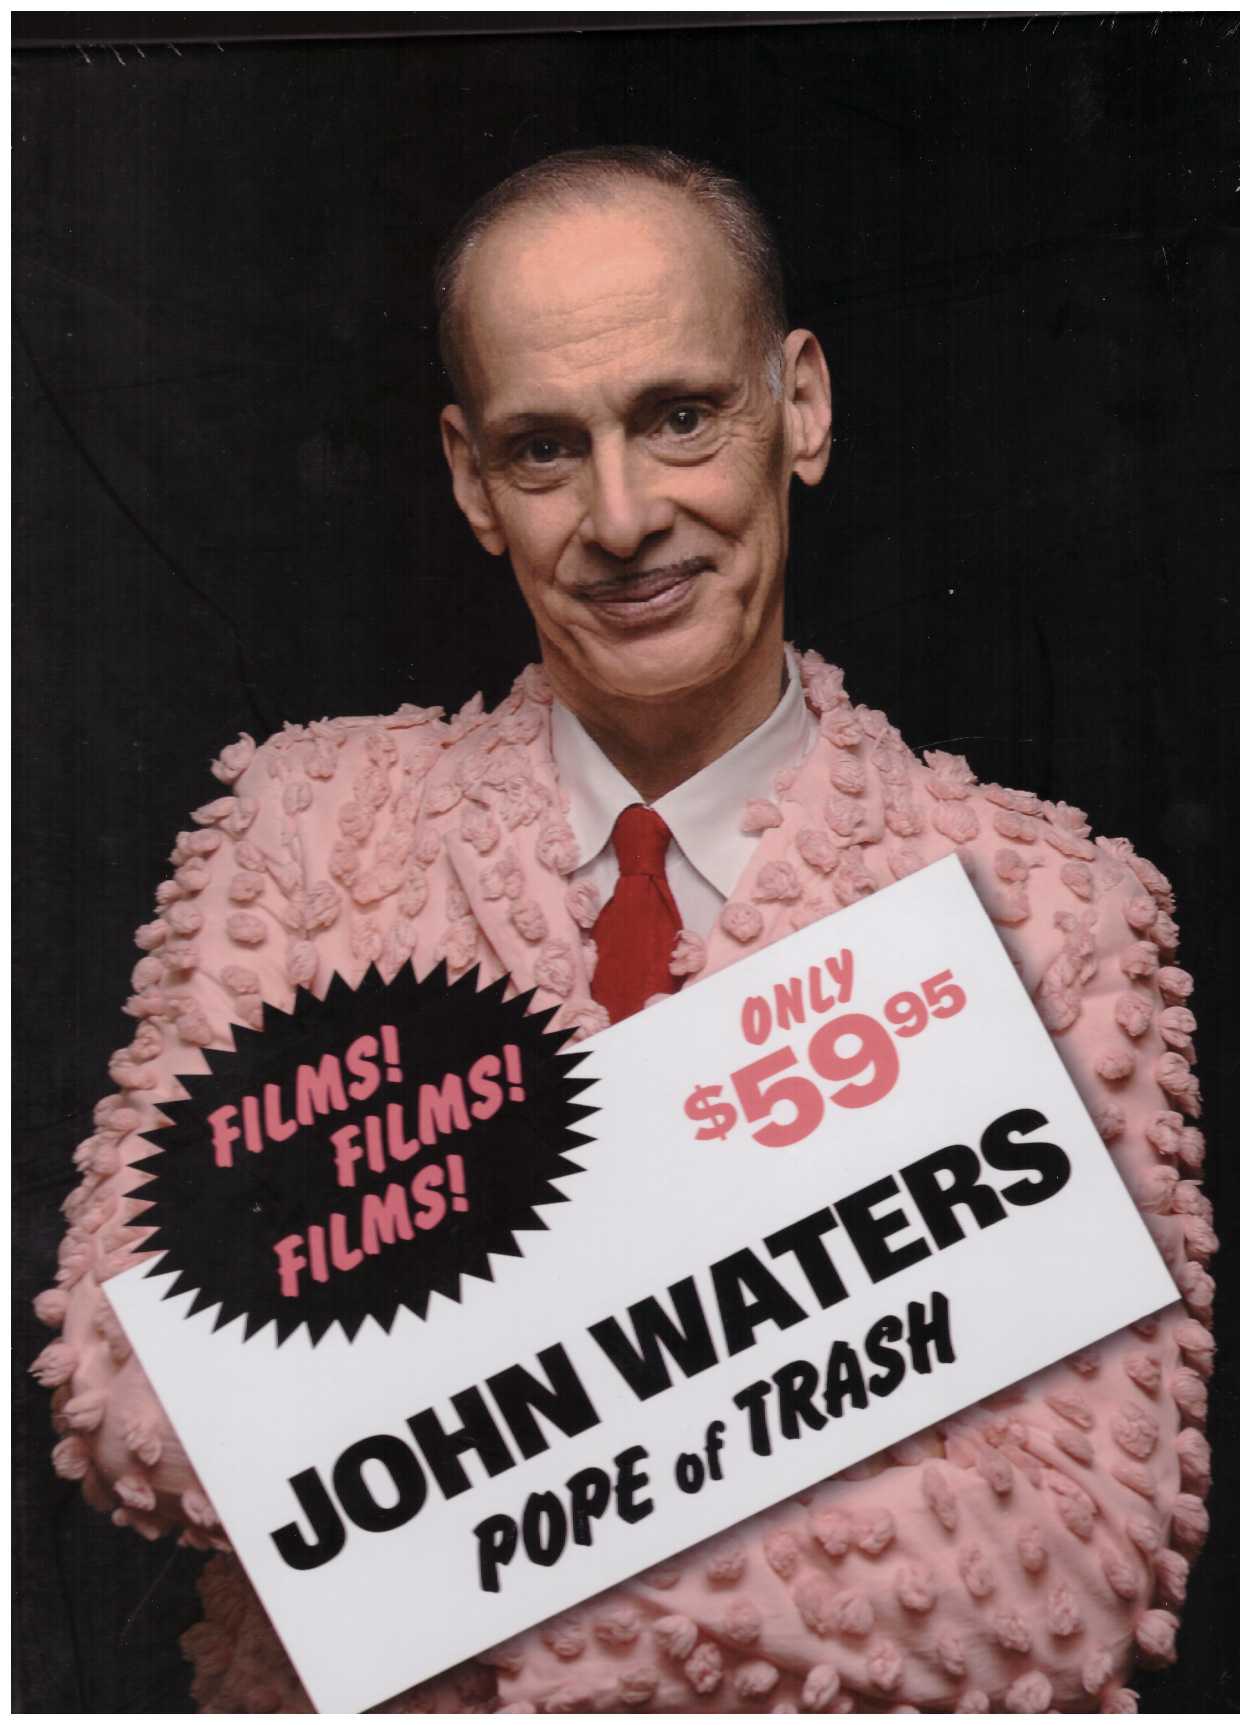 WATERS, John - John Waters: Pope of Trash